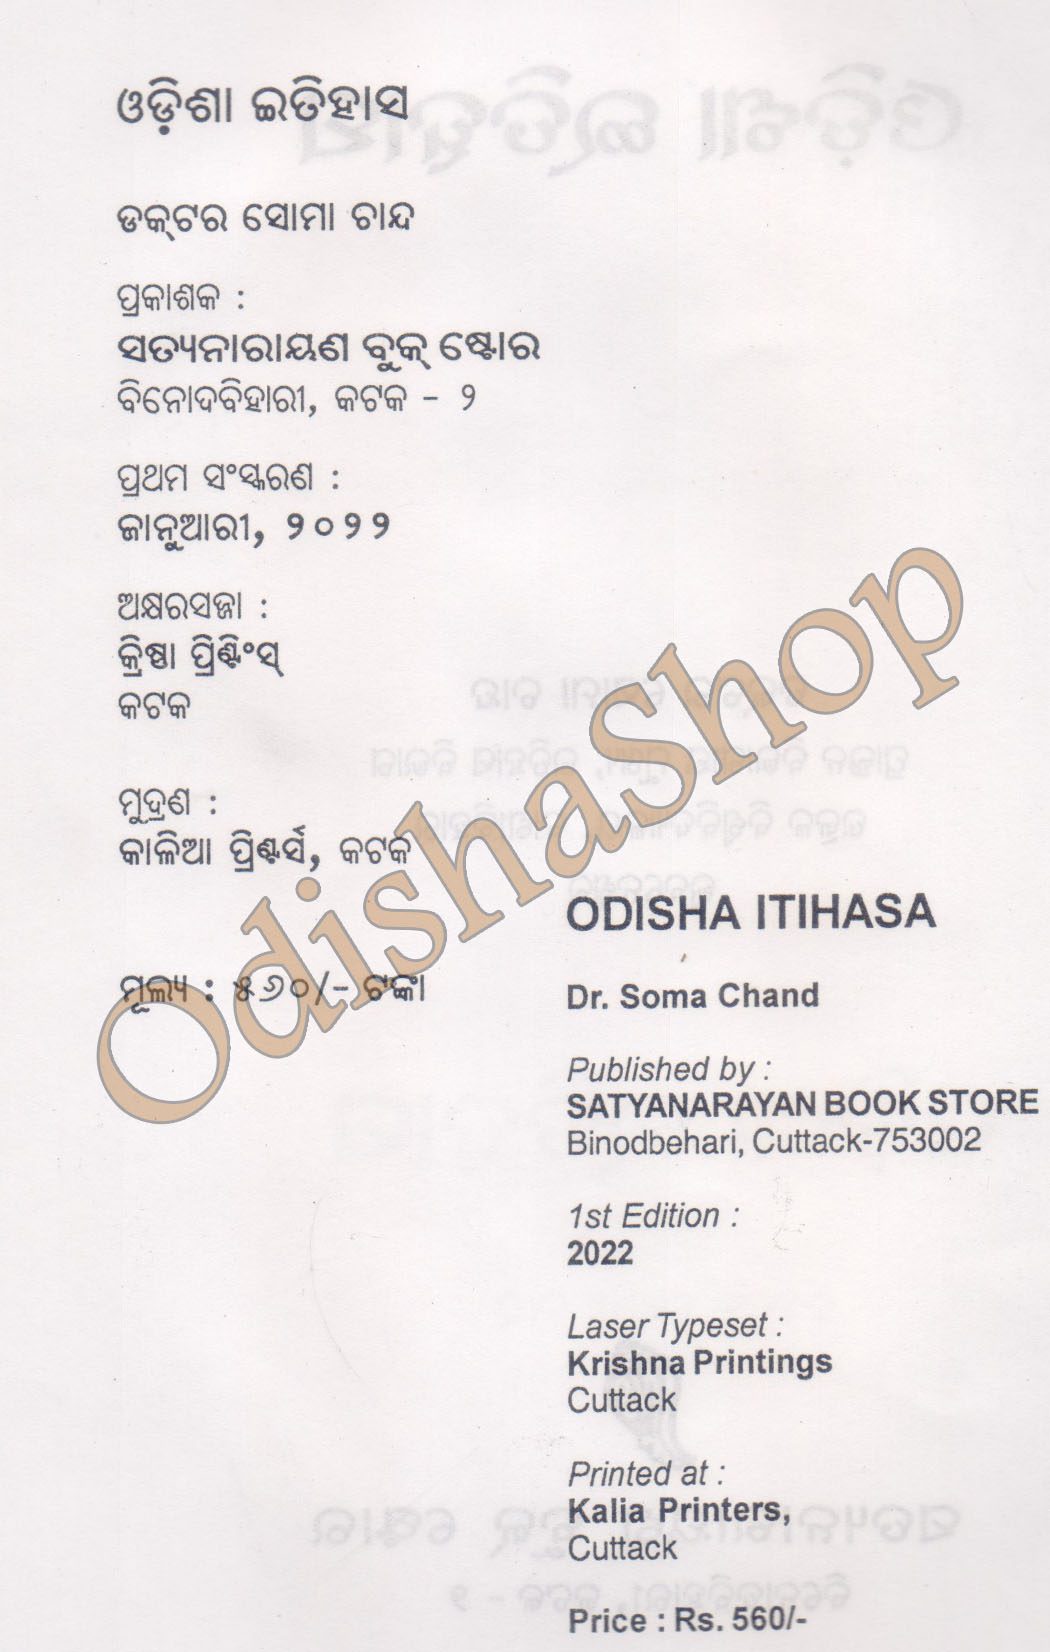 Odia spiritual book Odisha IthihasaFrom Odishashop 2